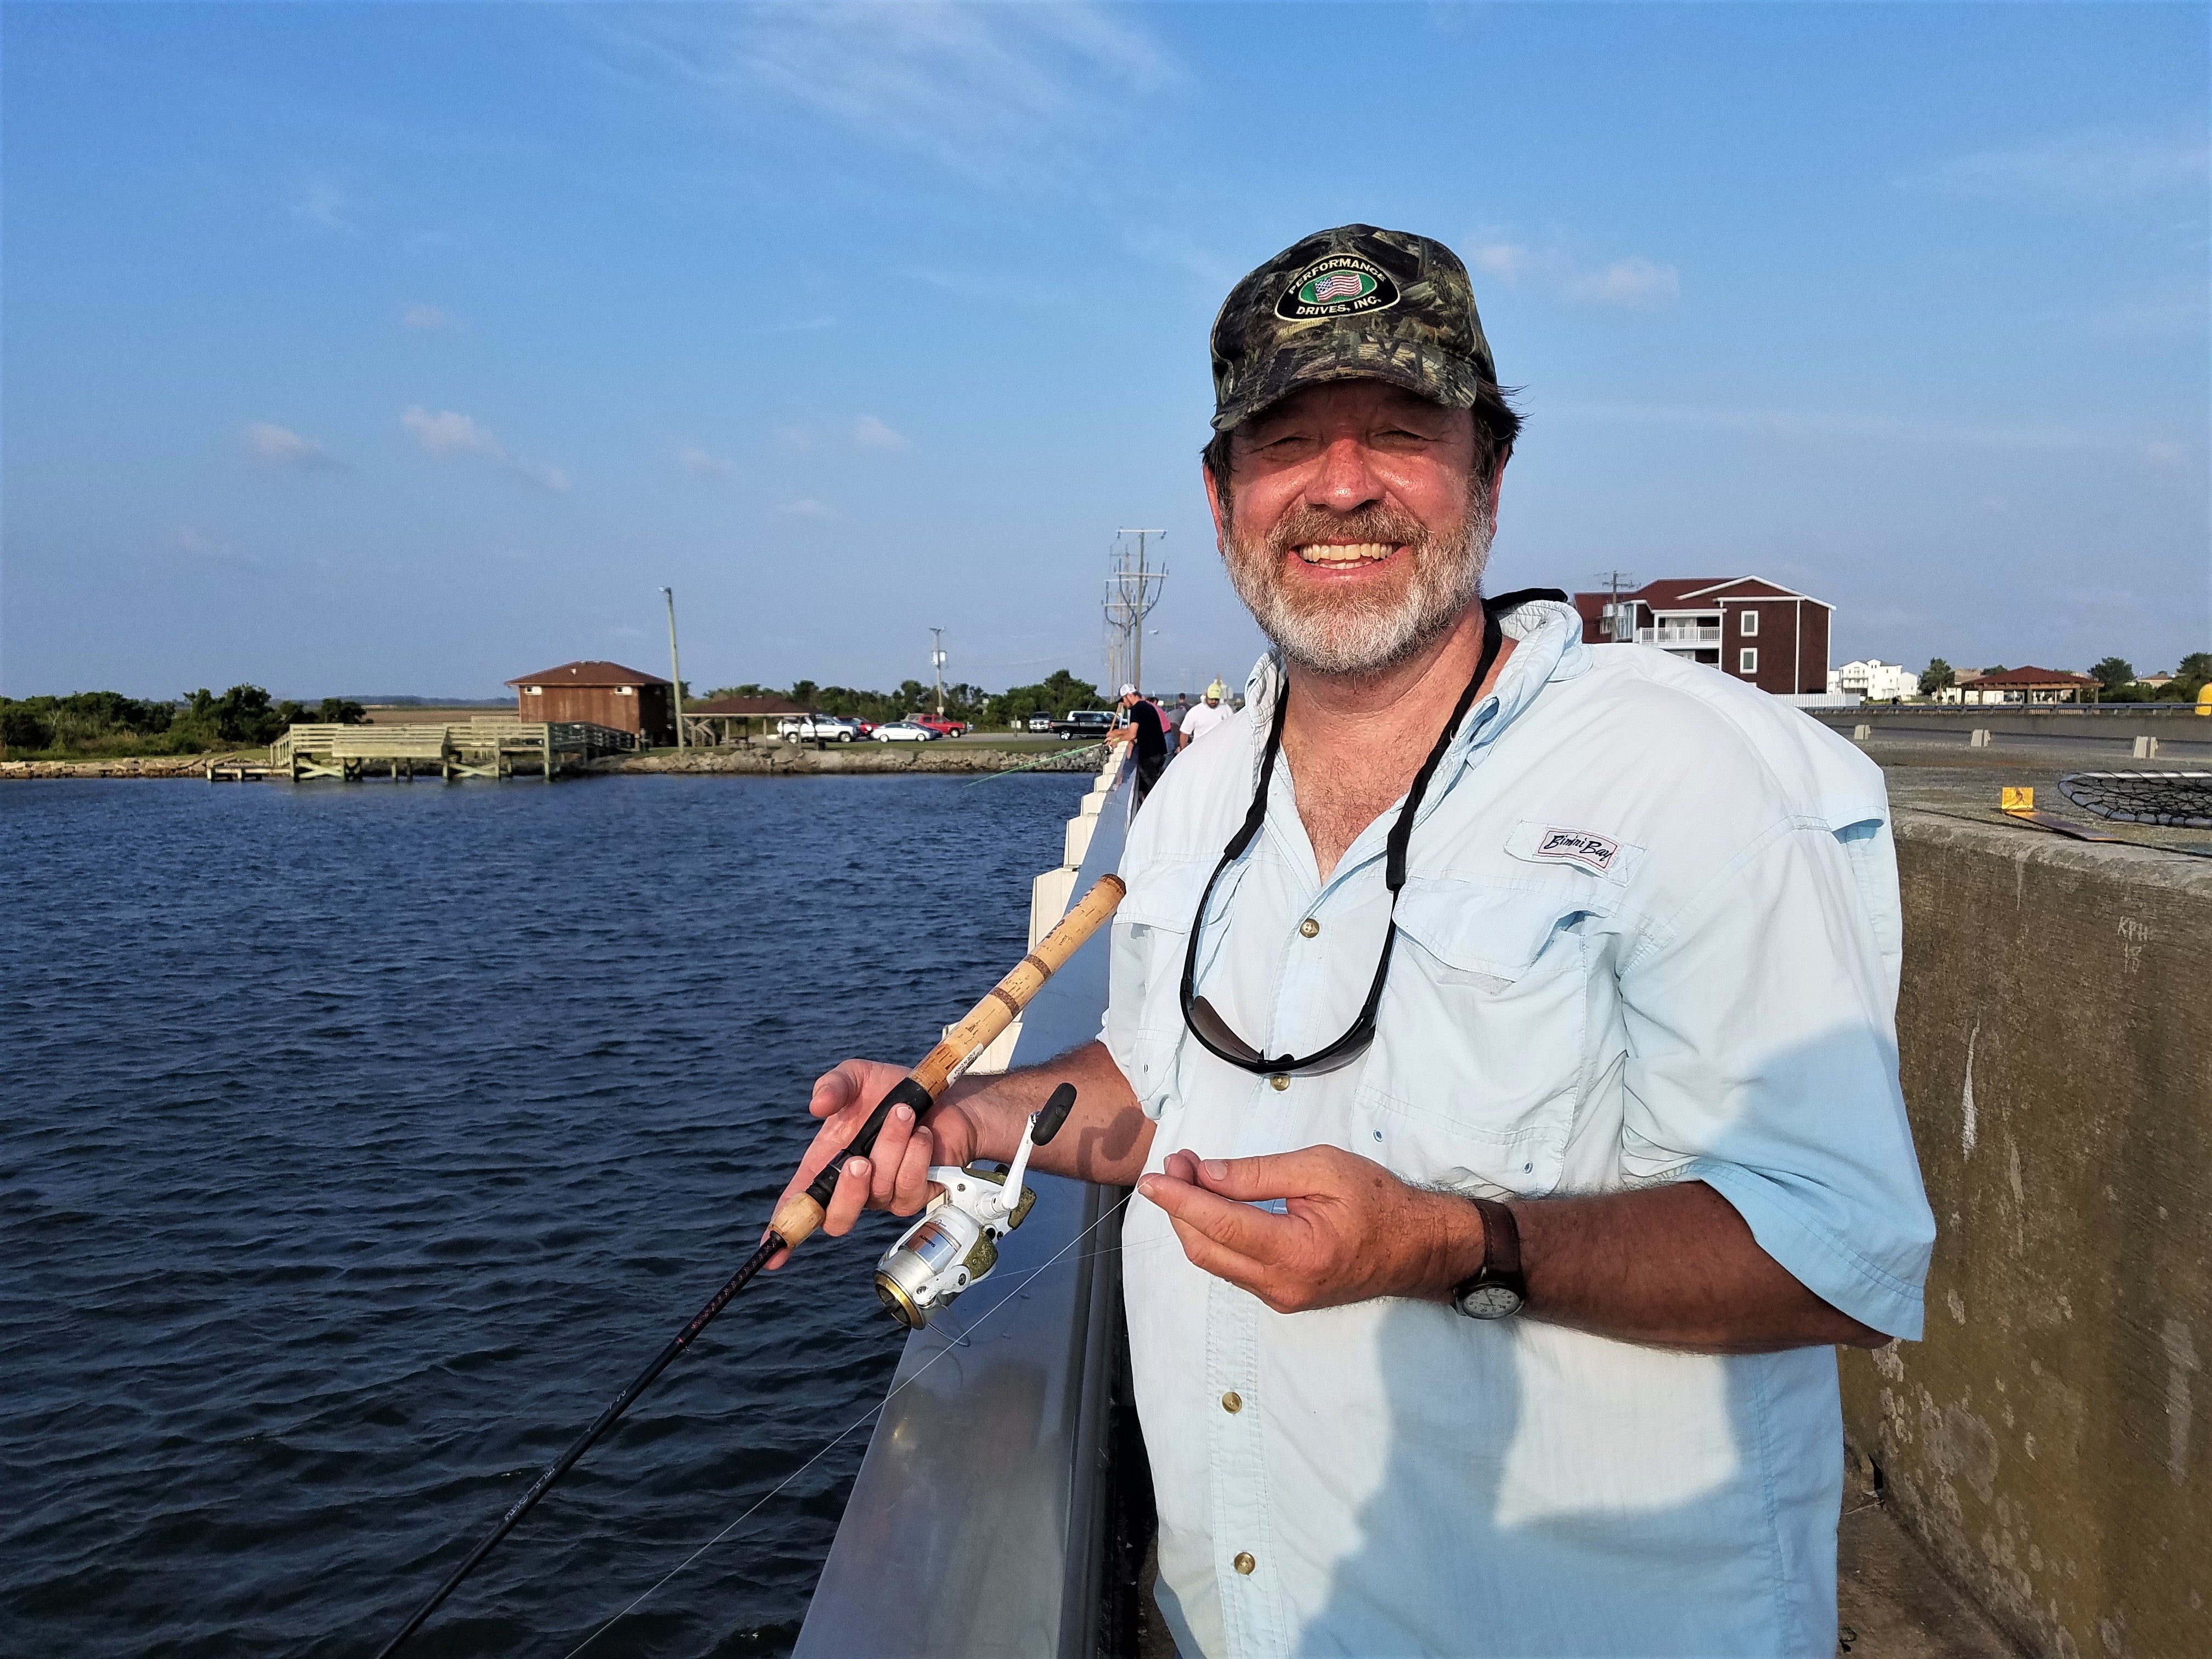 Fishin' Fun: Slow, steady retrieve key for trout - The Coastland